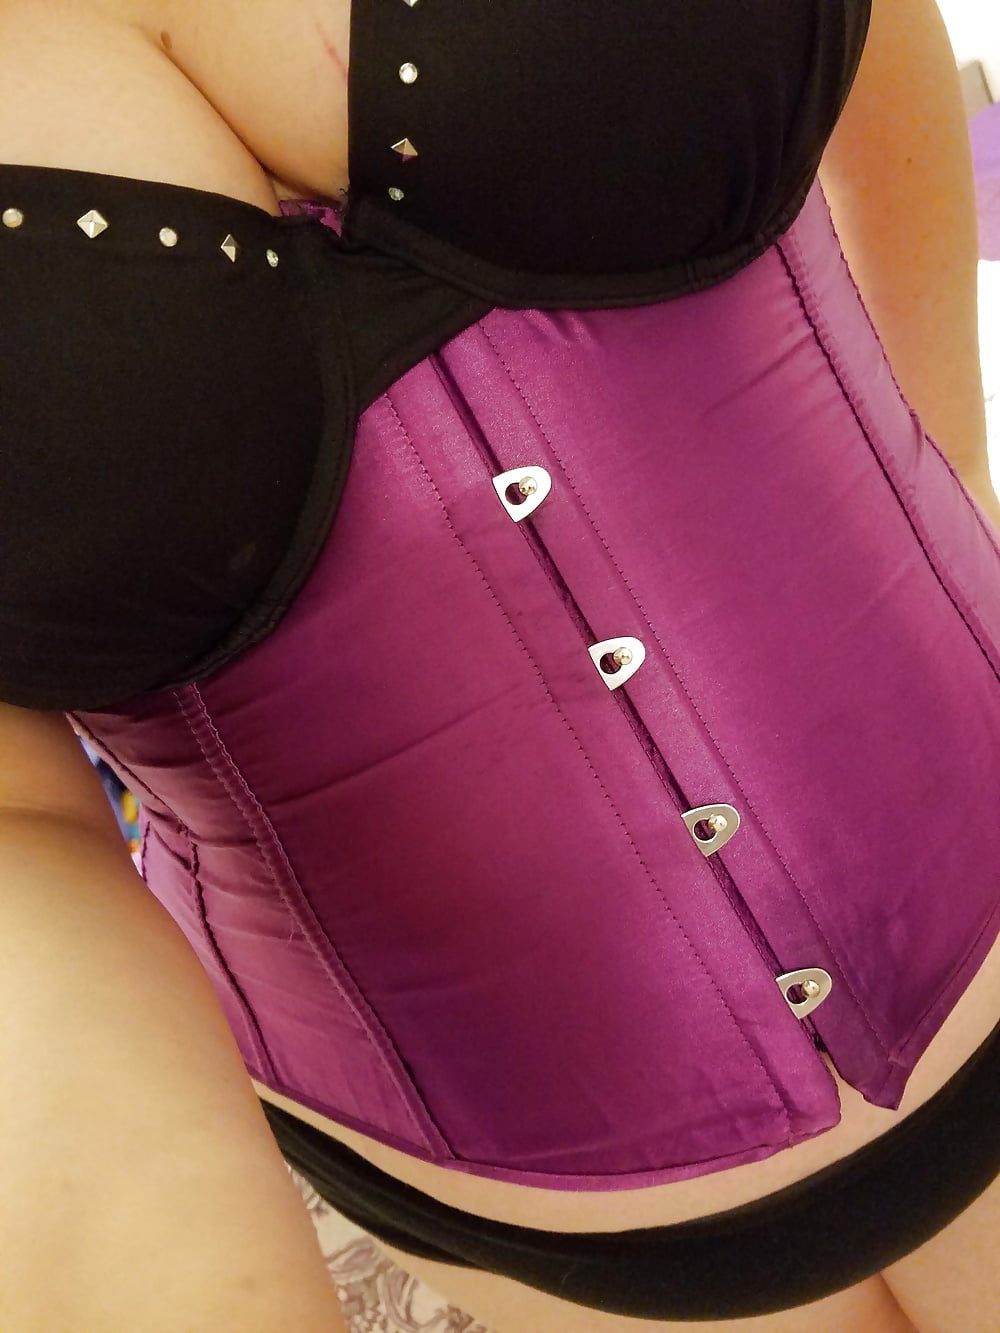 Sexy Purple Corset and Heels #106802430